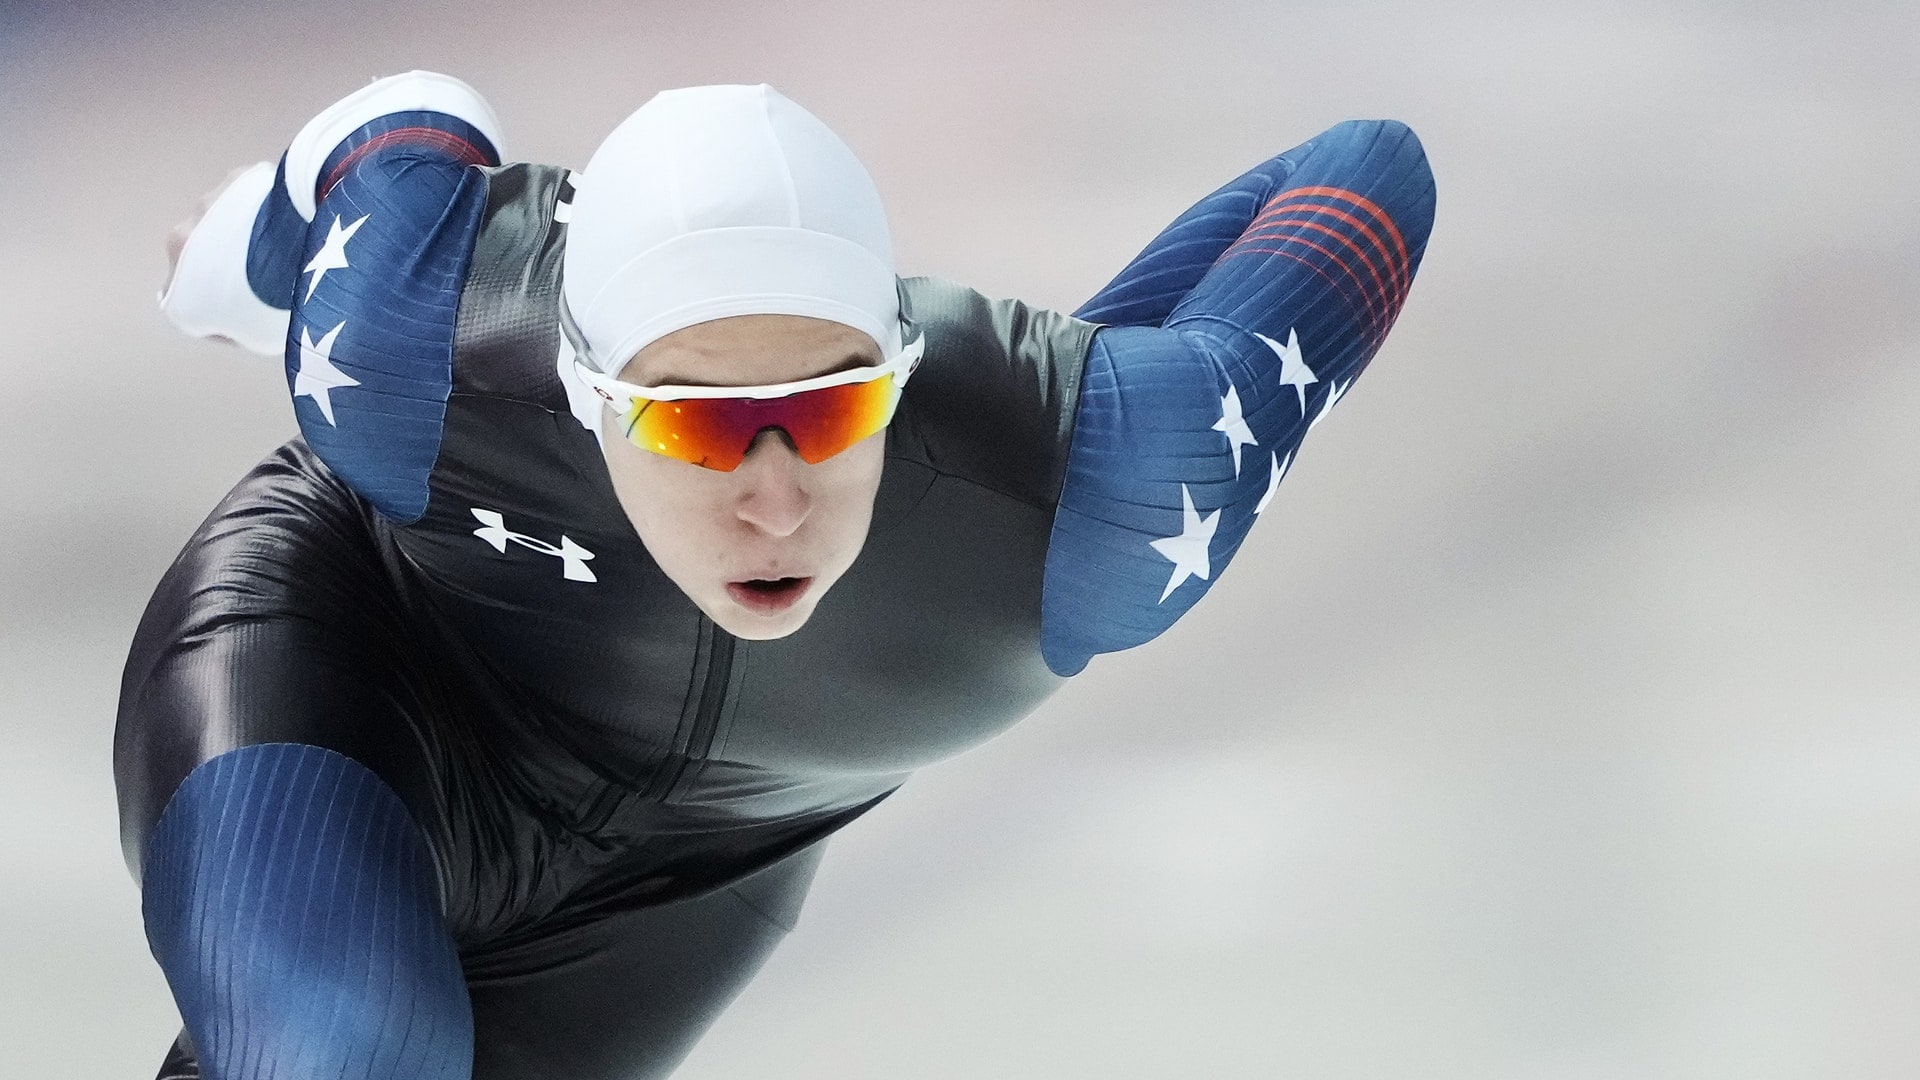  Speed skating preview: Jordan Stolz makes Olympic debut in men's 500m 